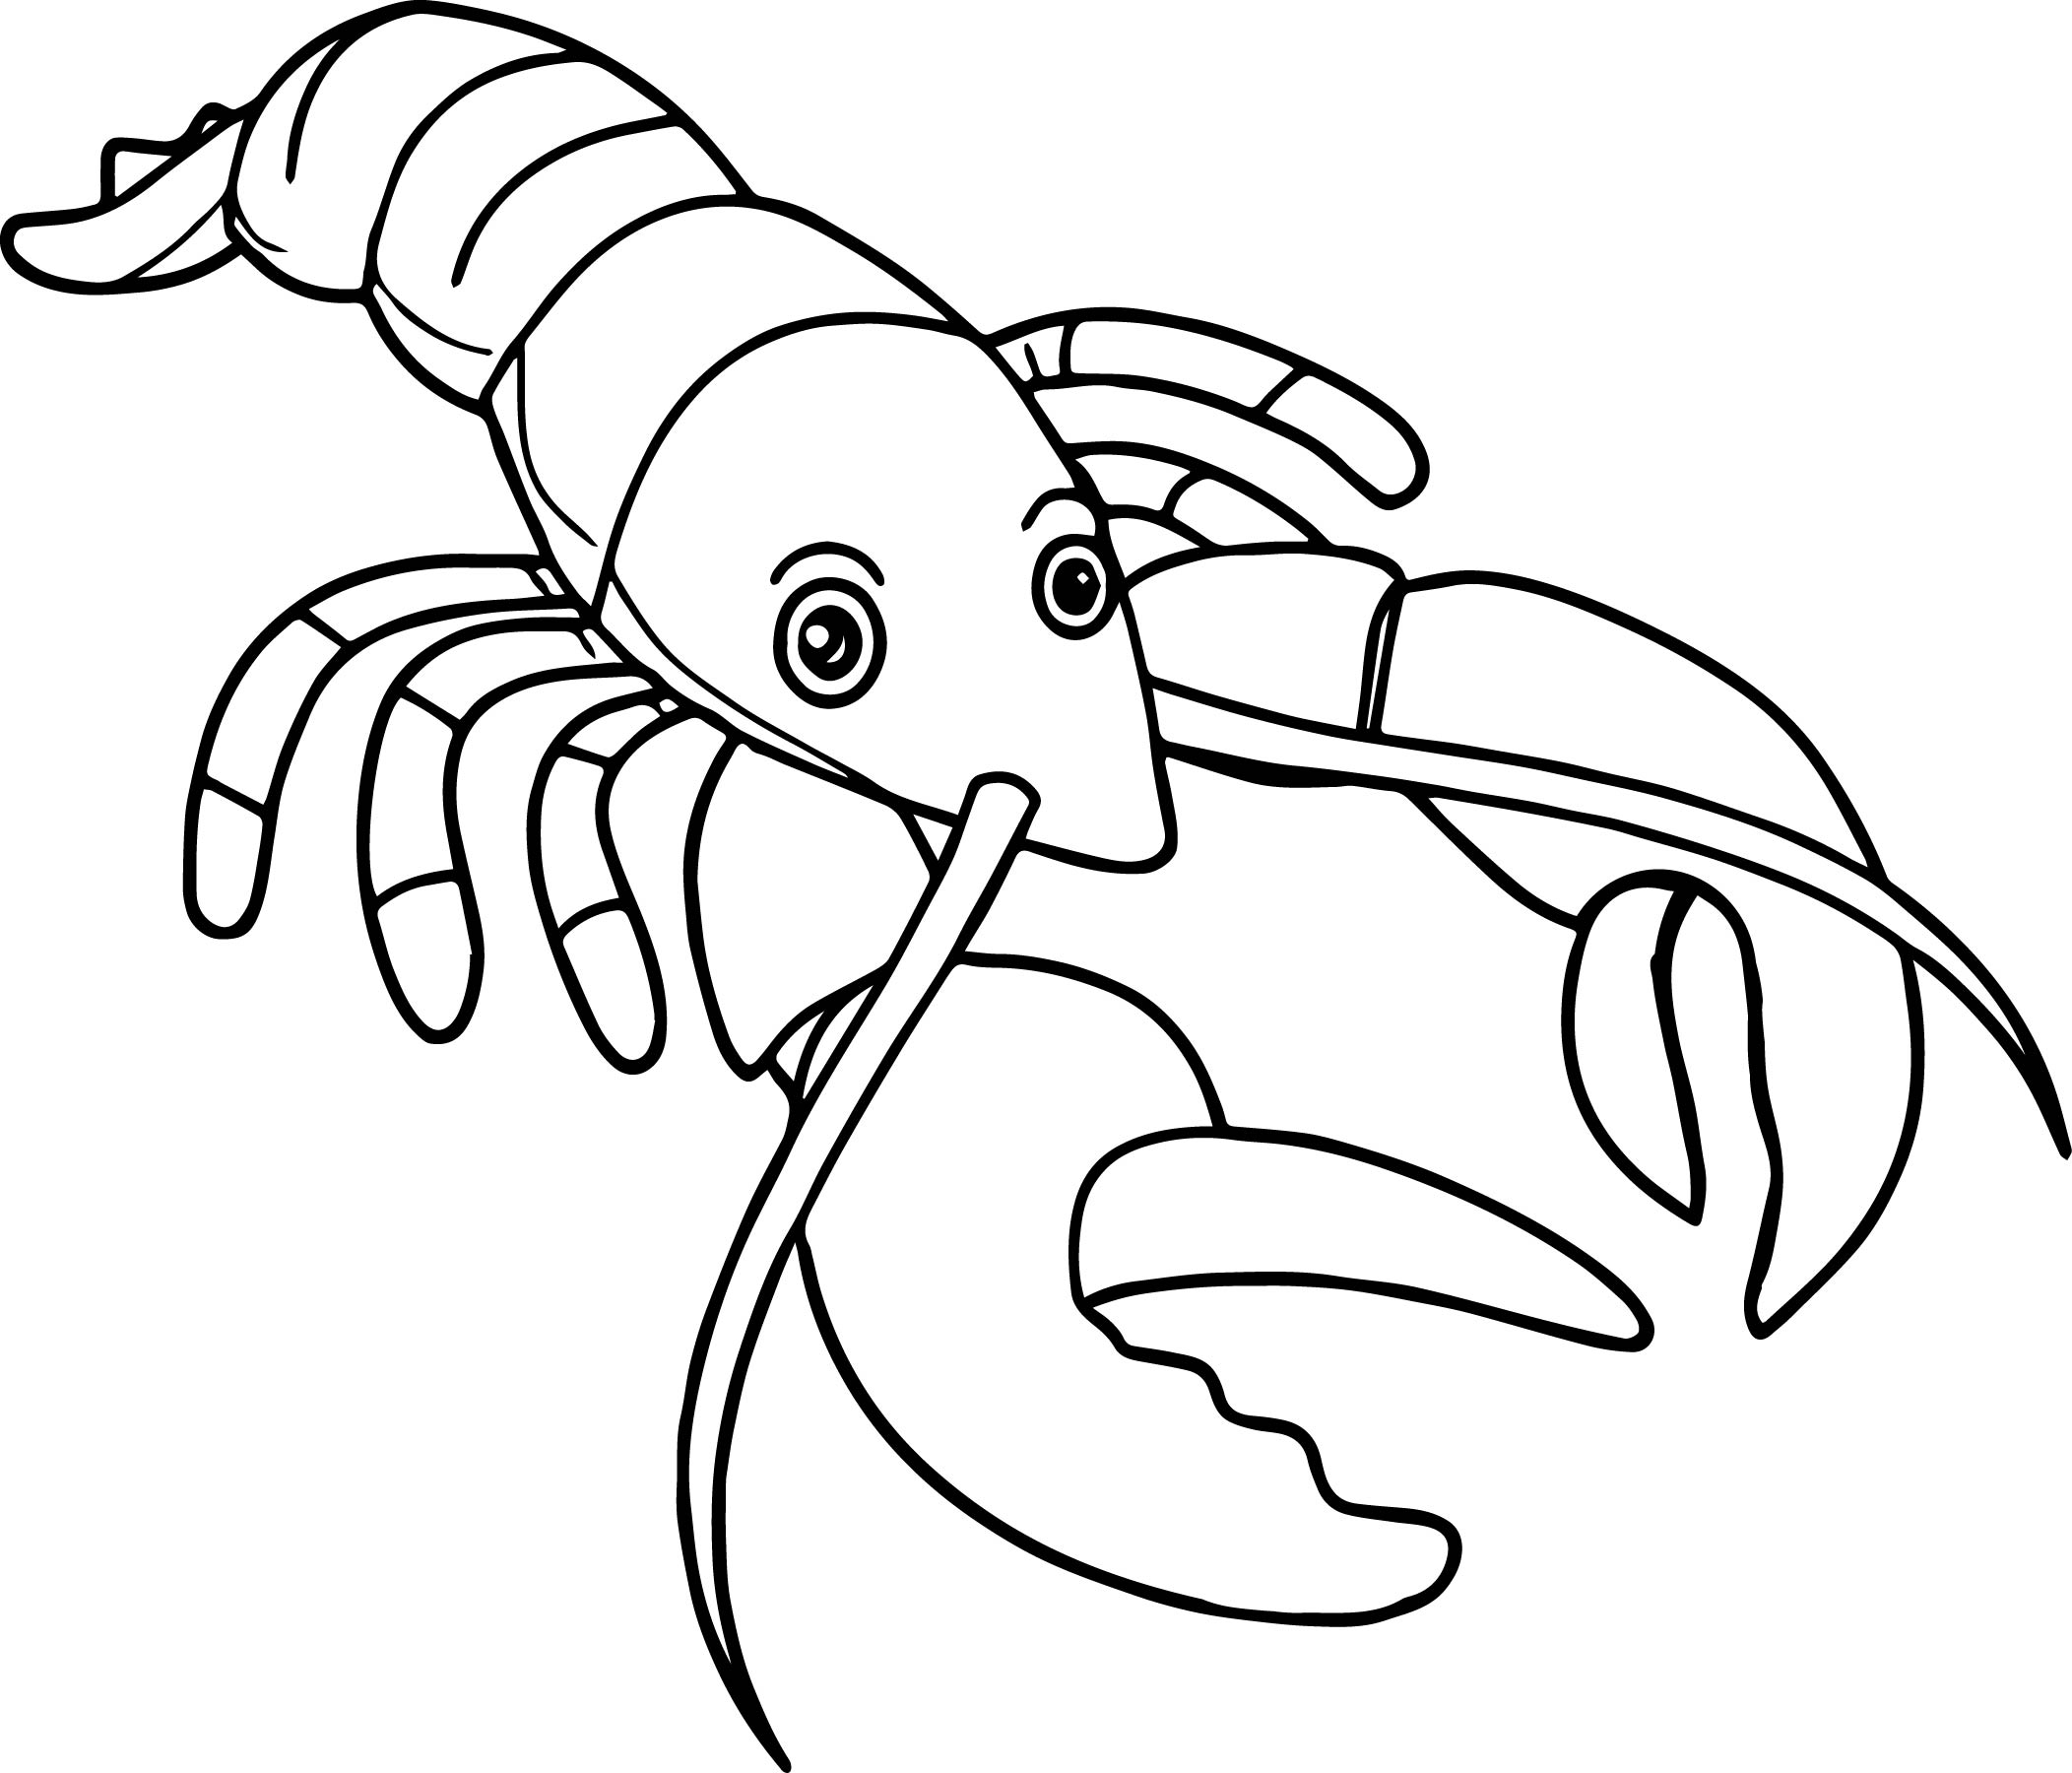 Lobster coloring #7, Download drawings